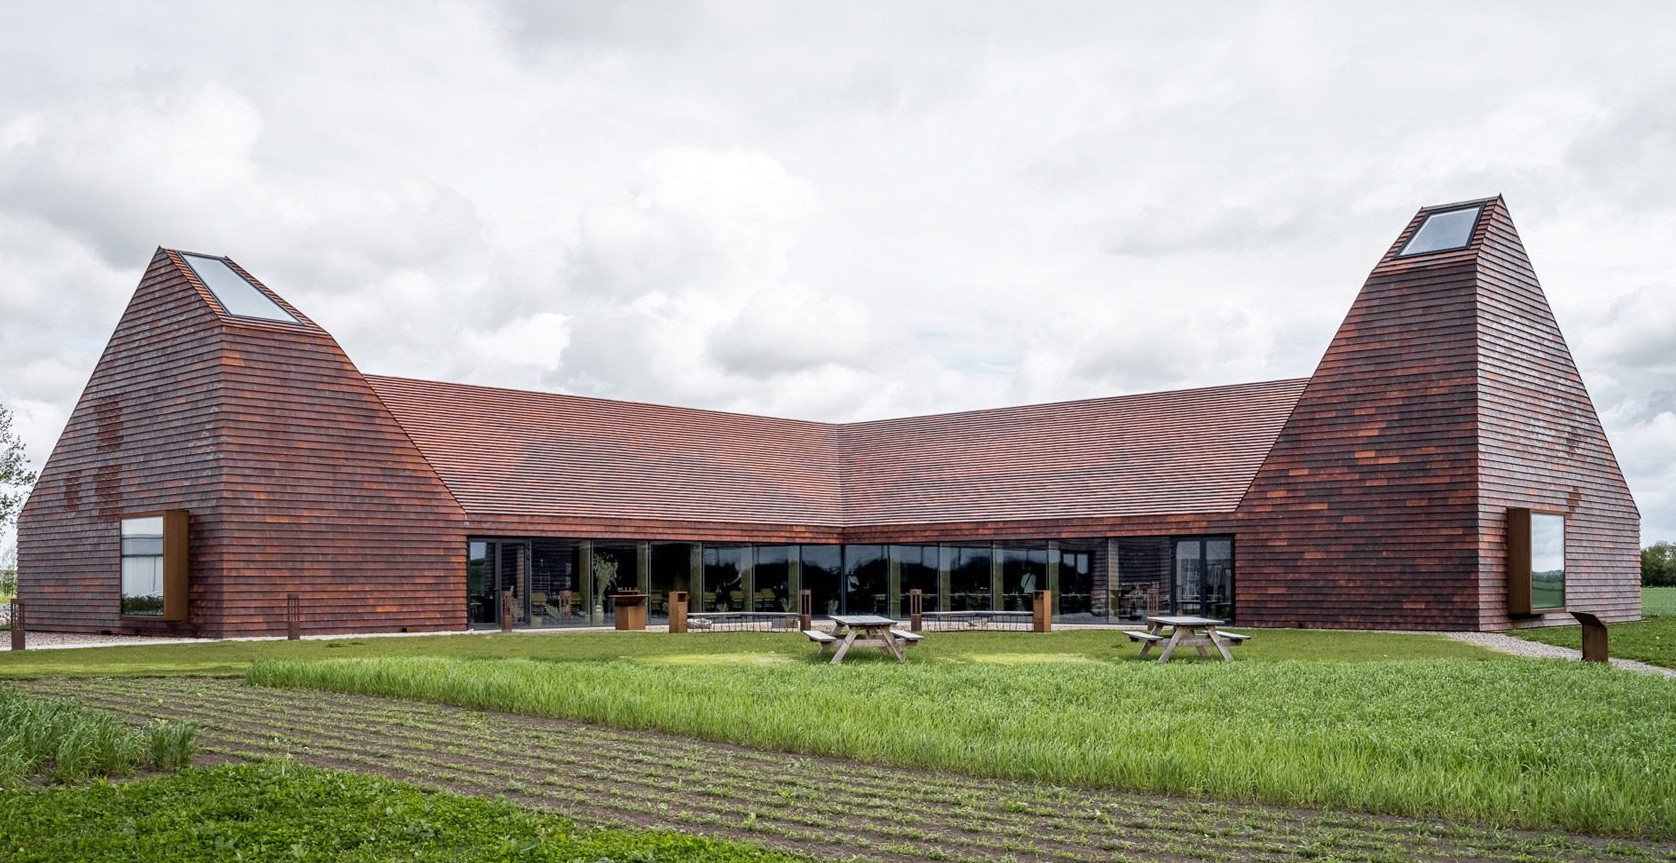 Dinamarca: Centro gastronómico Kornets Hus - Reiulf Ramstad Arkitekter